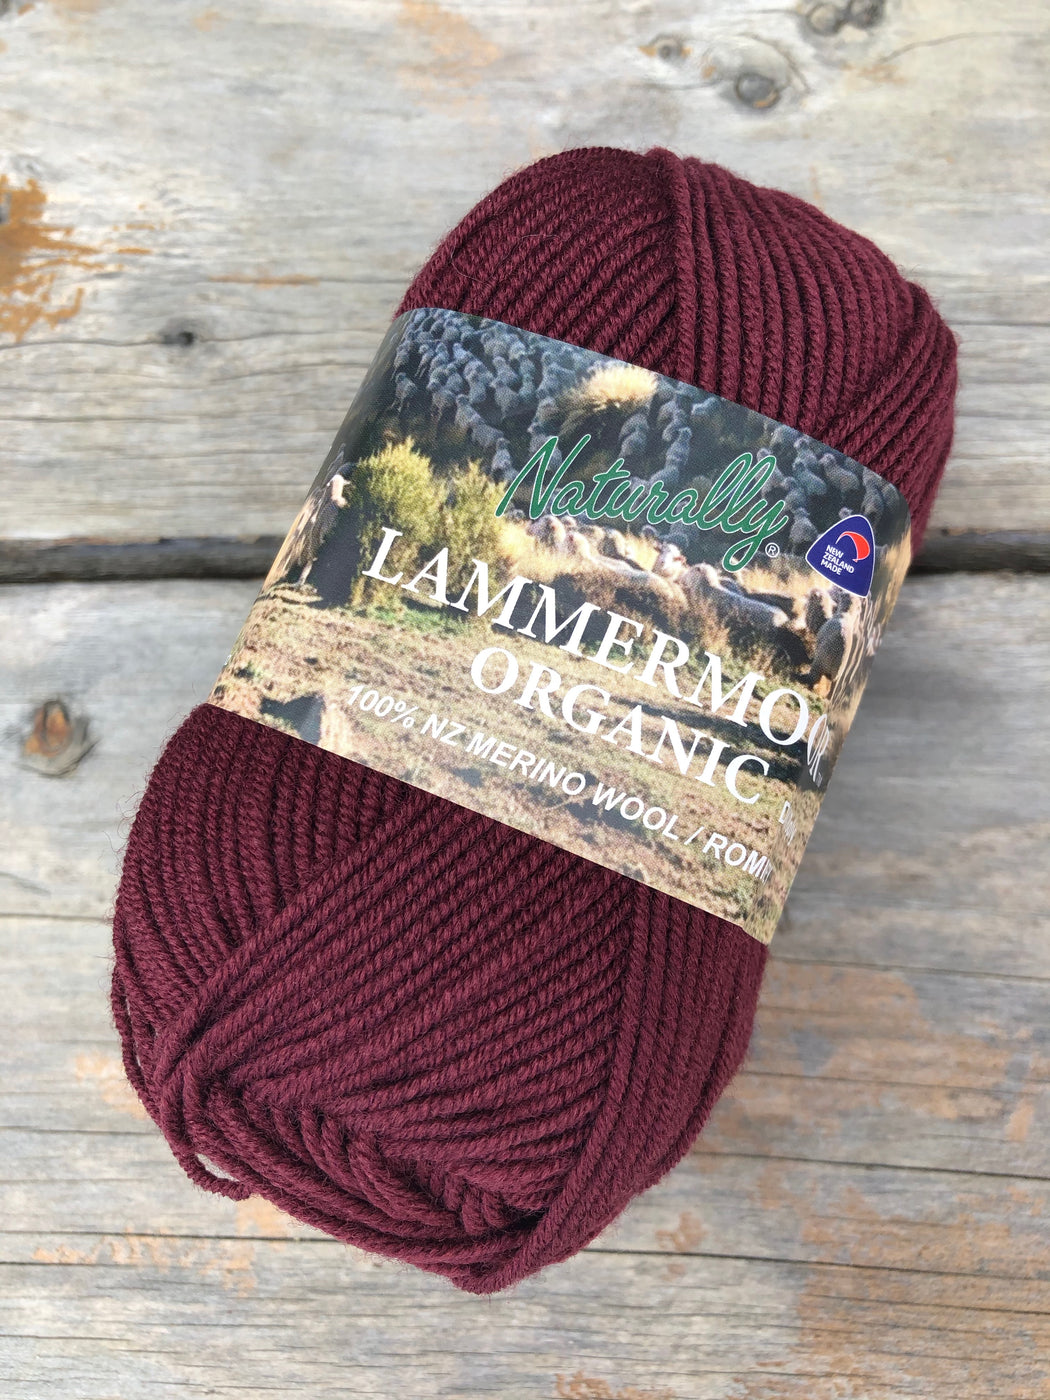 Lammermoor Organic DK